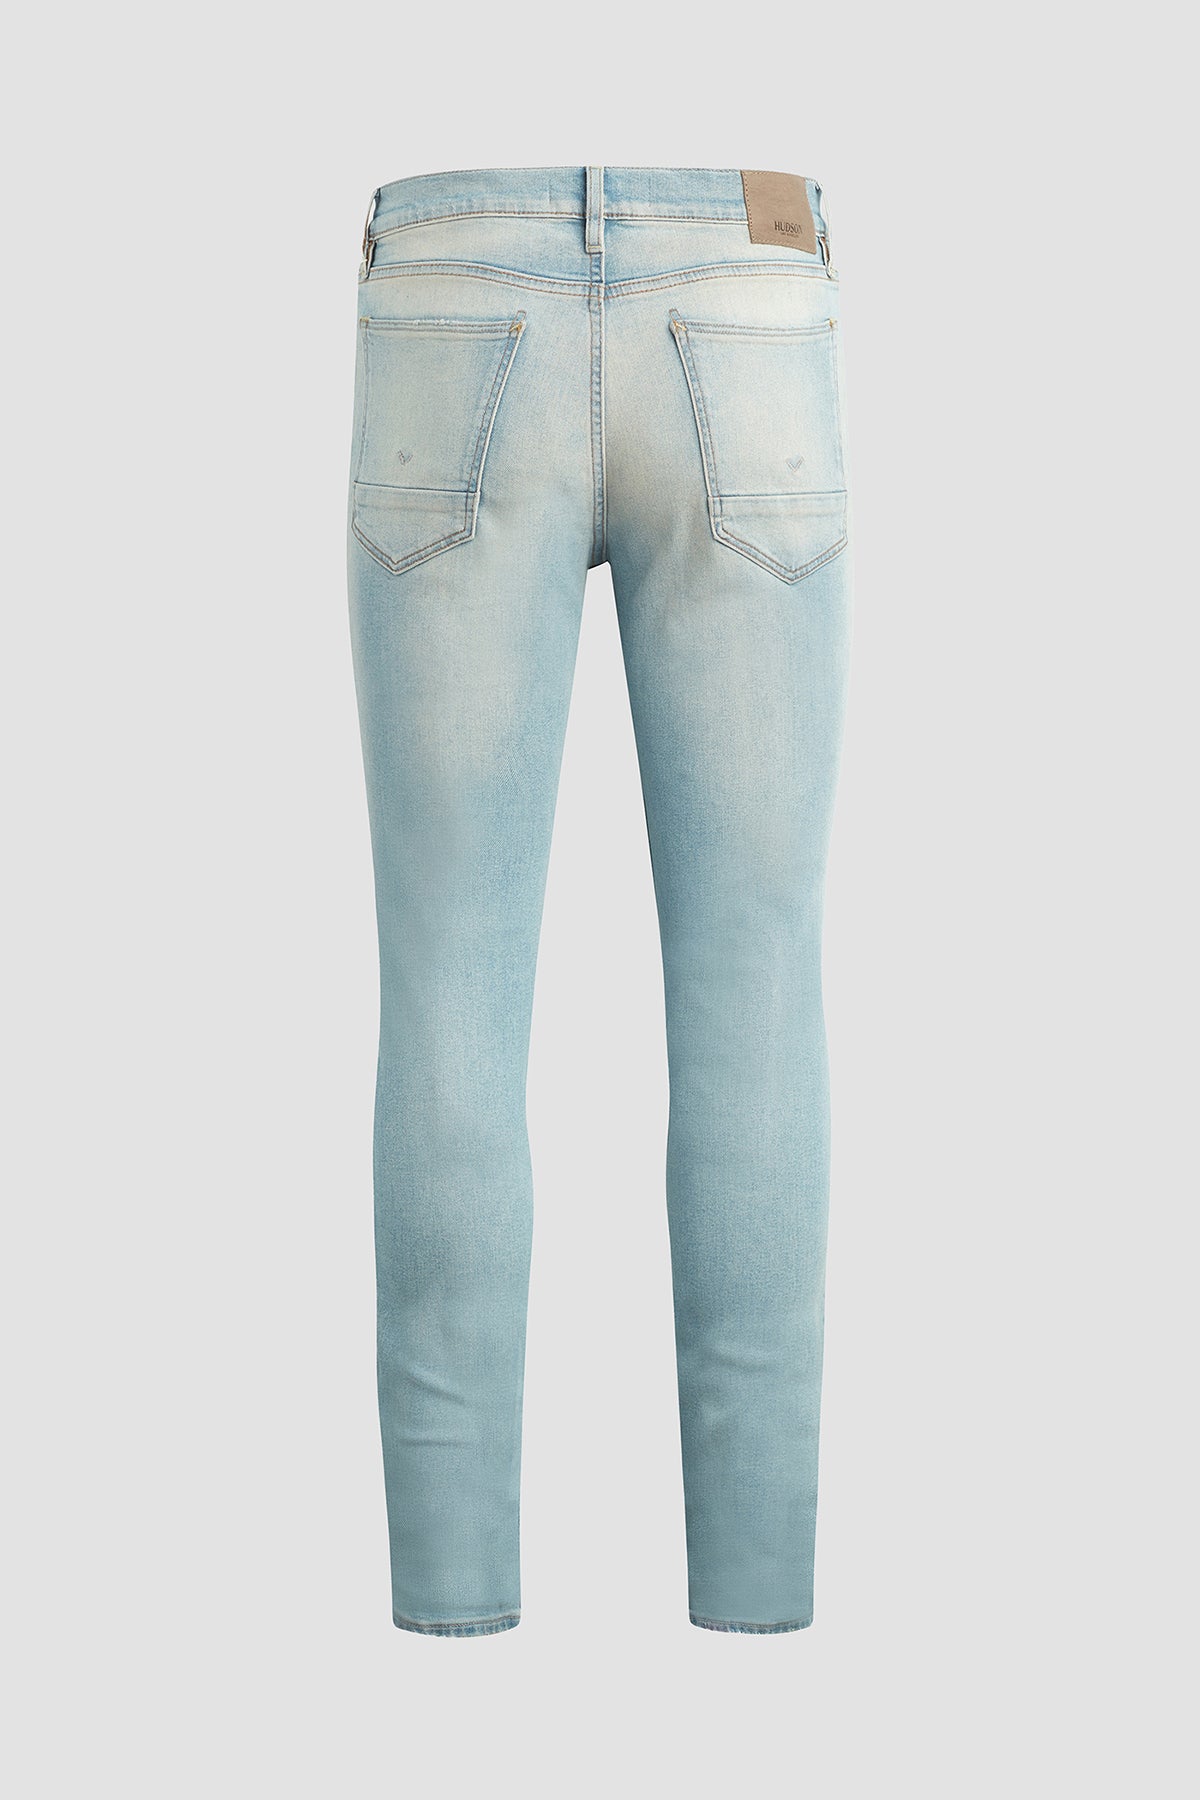 HOT! Tons of Hudson jeans under $100!! - Mint Arrow